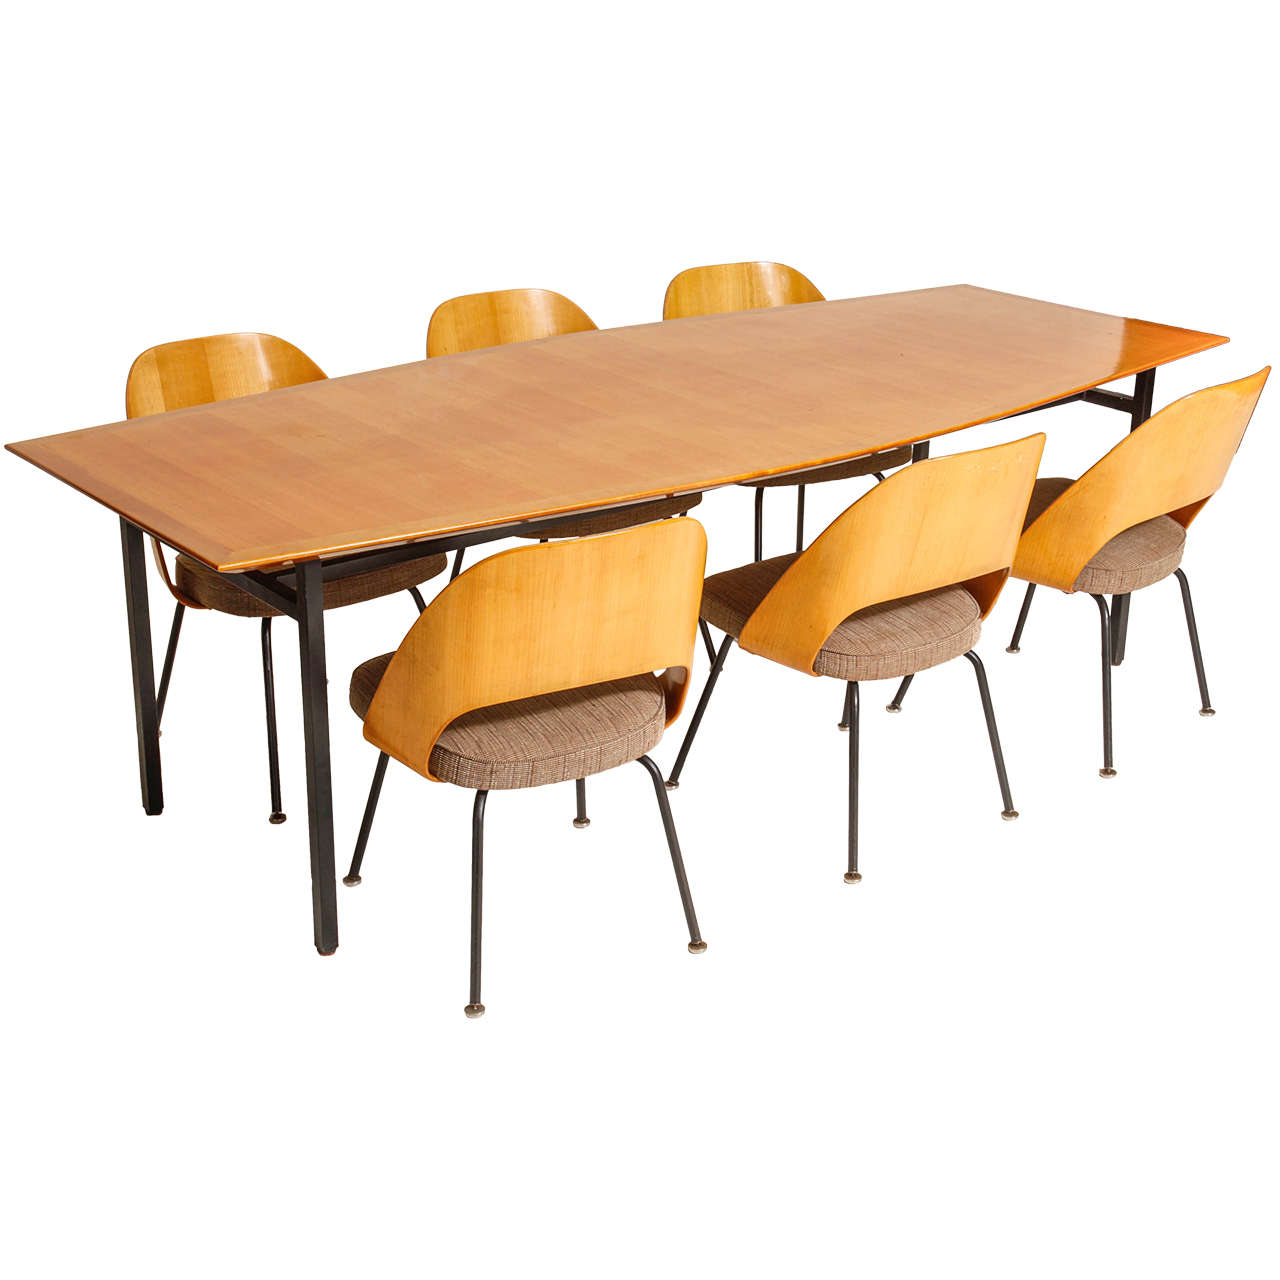 Eero Saarinen Chairs and Florence Knoll Table